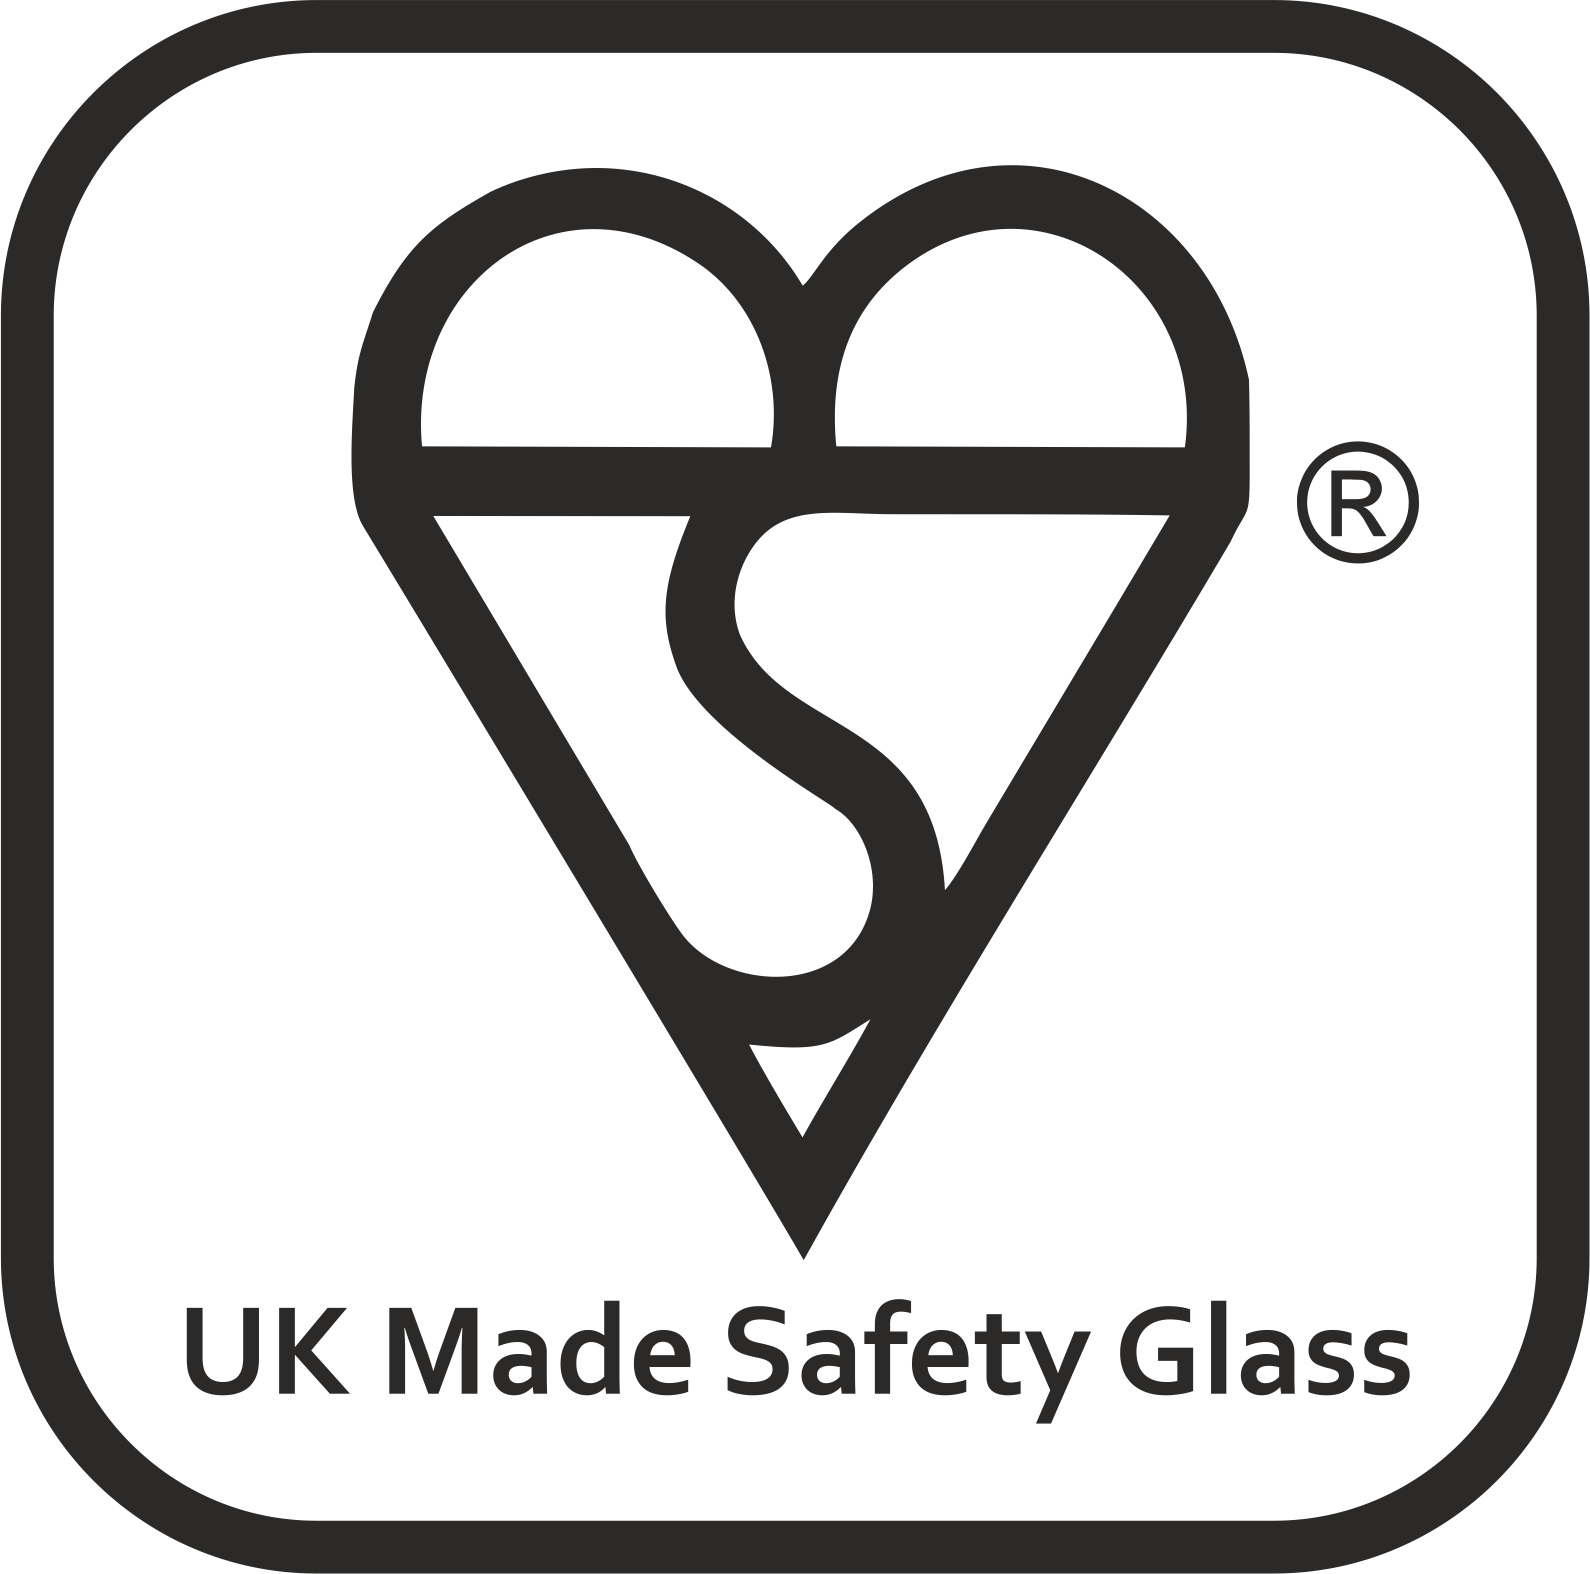 UK Kite safety approved logo